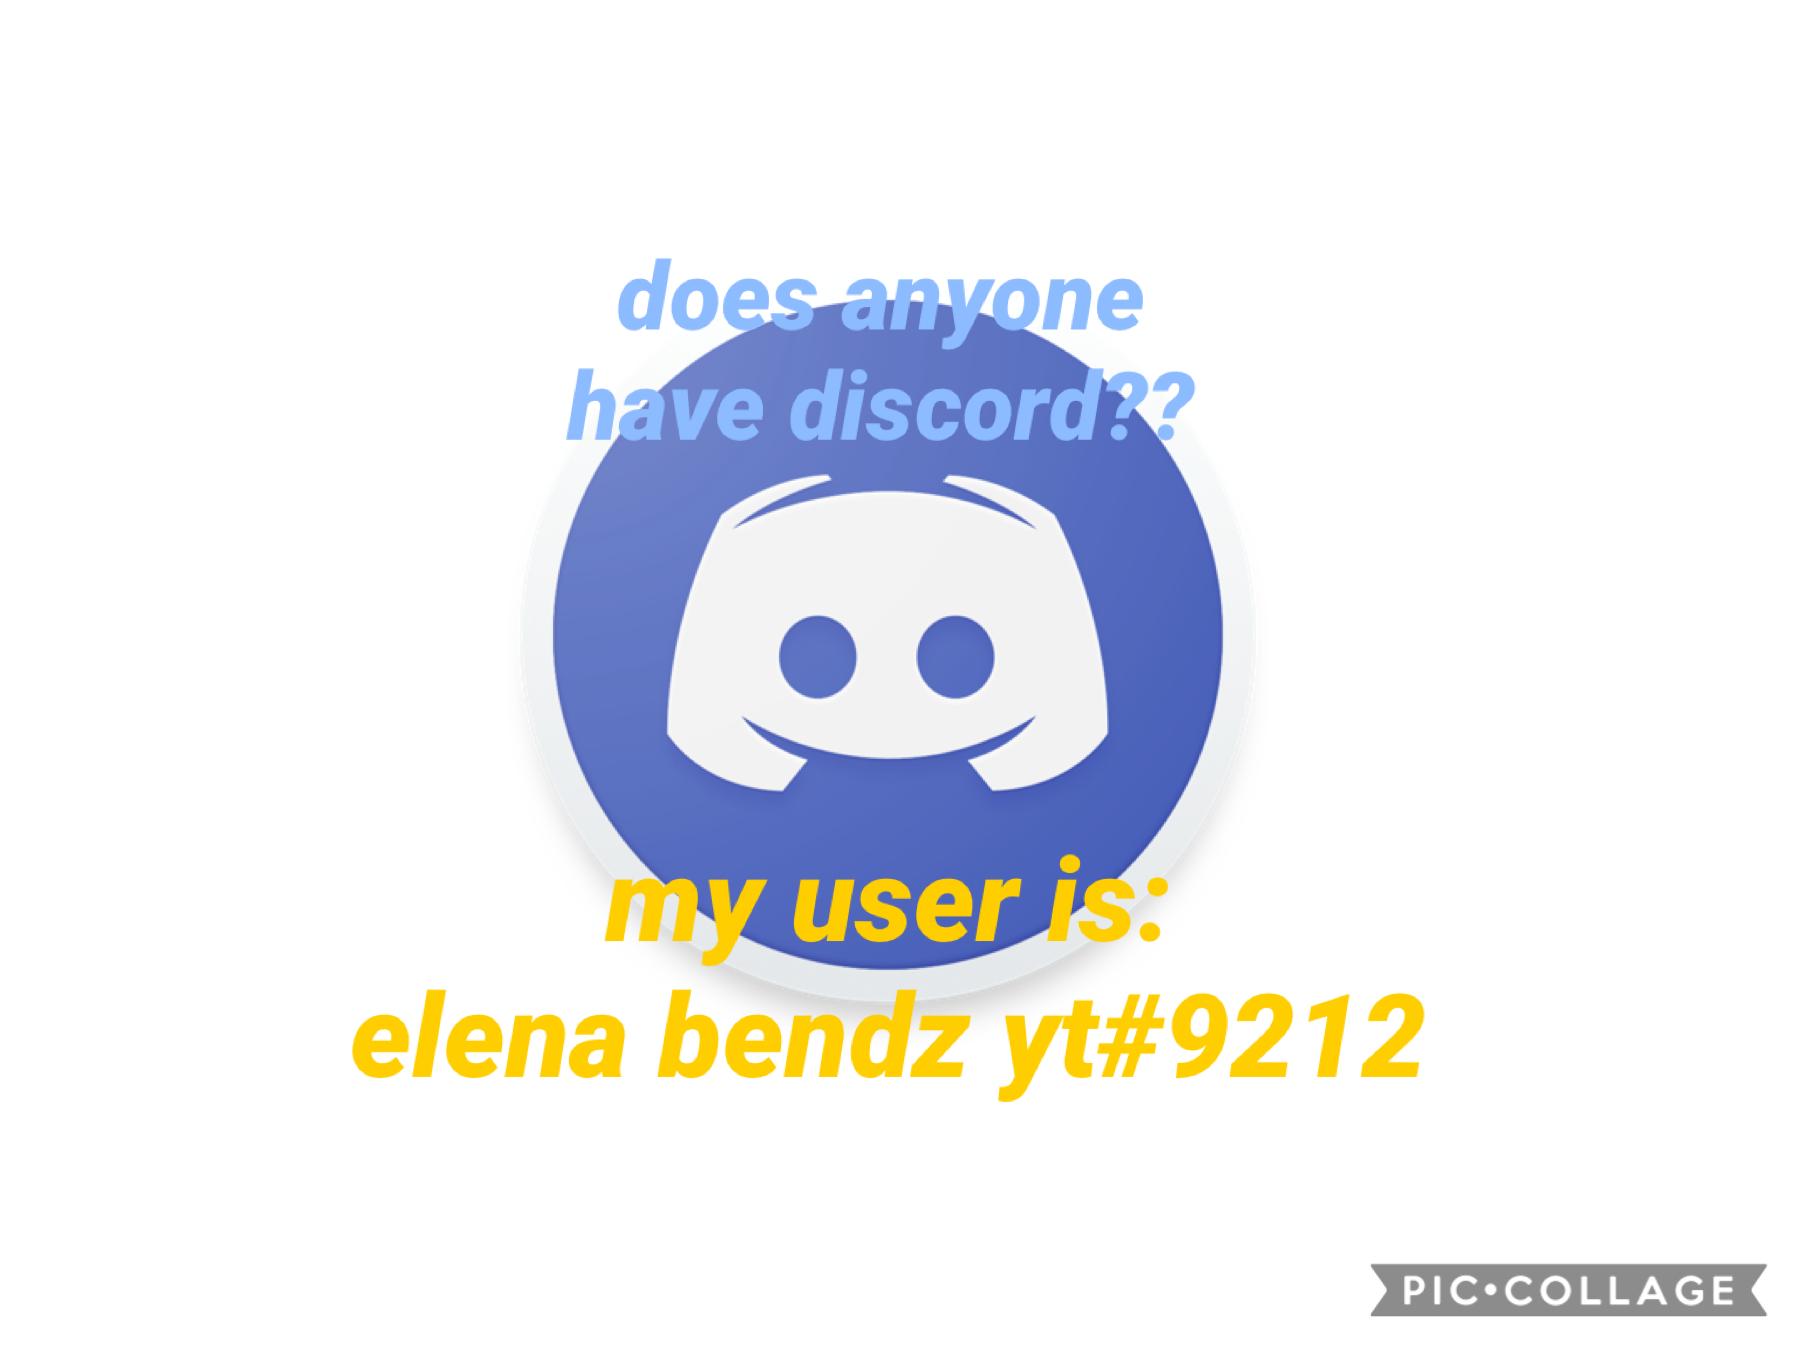 my discord user is: elena bendz yt#9212